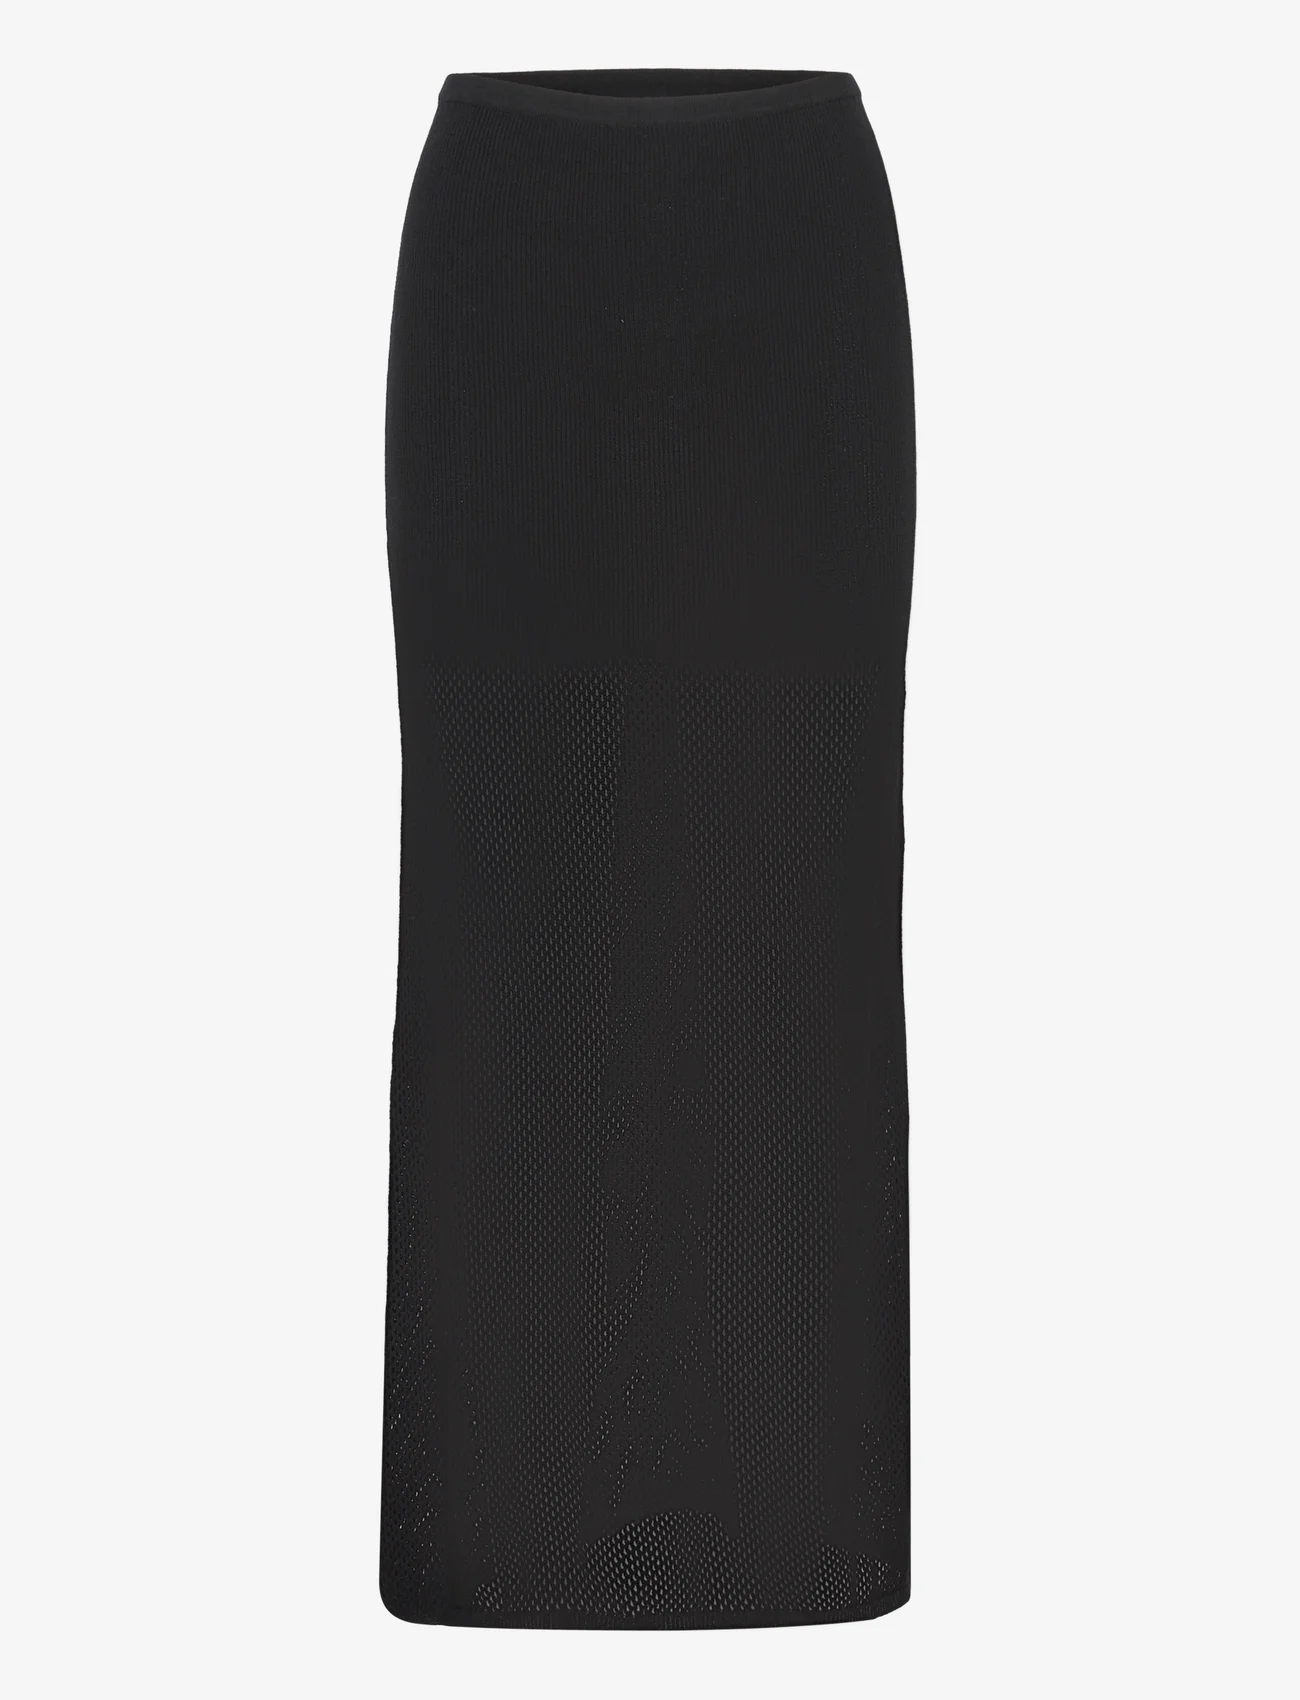 My Essential Wardrobe - AvaMW Knit Skirt - maxi röcke - black - 0